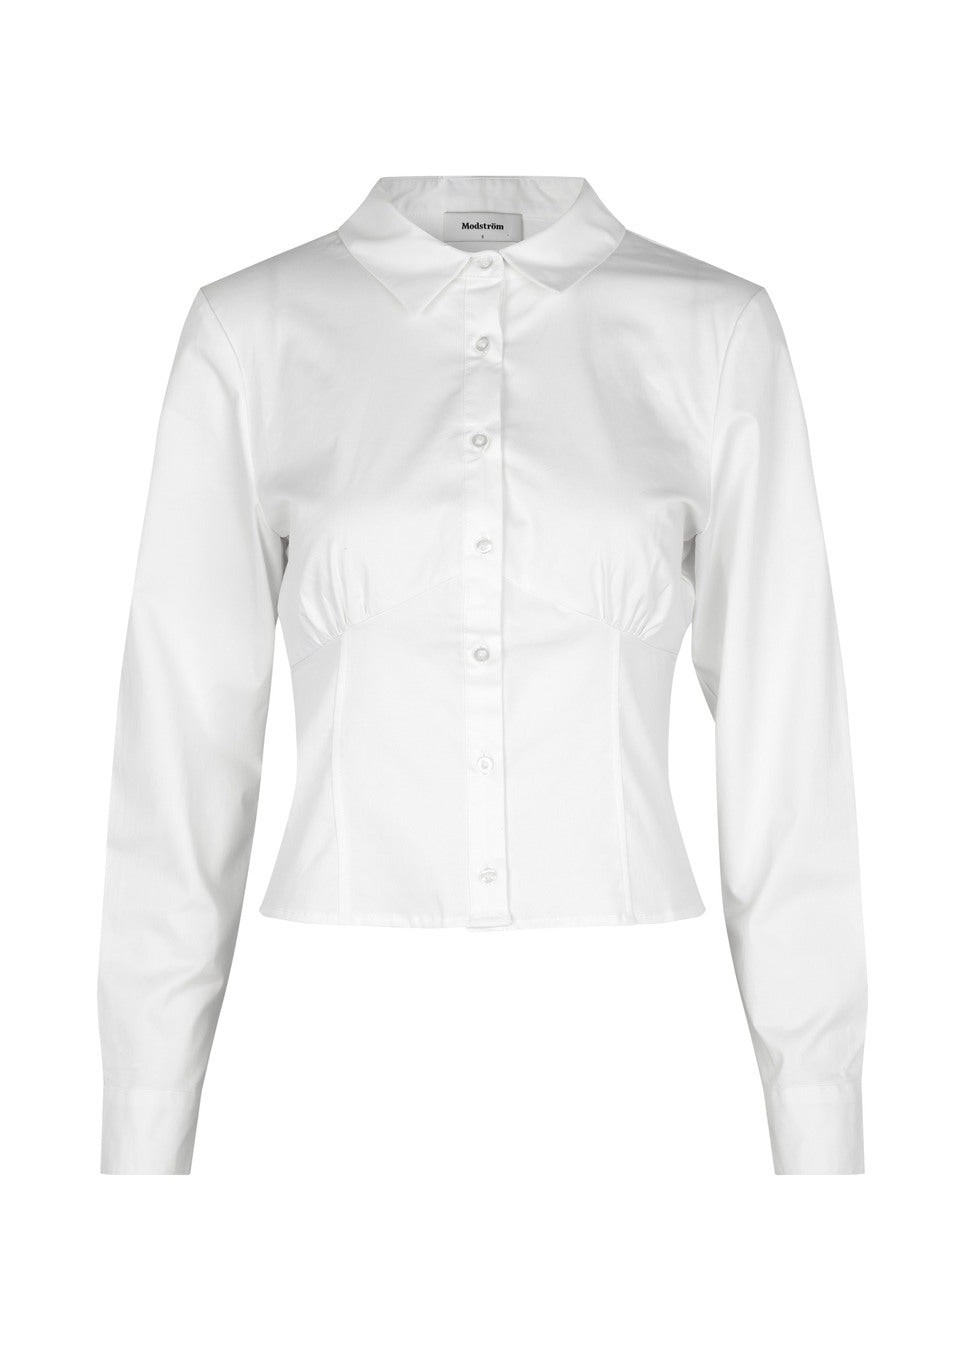 Modström - HarrisonMD shirt - Soft White